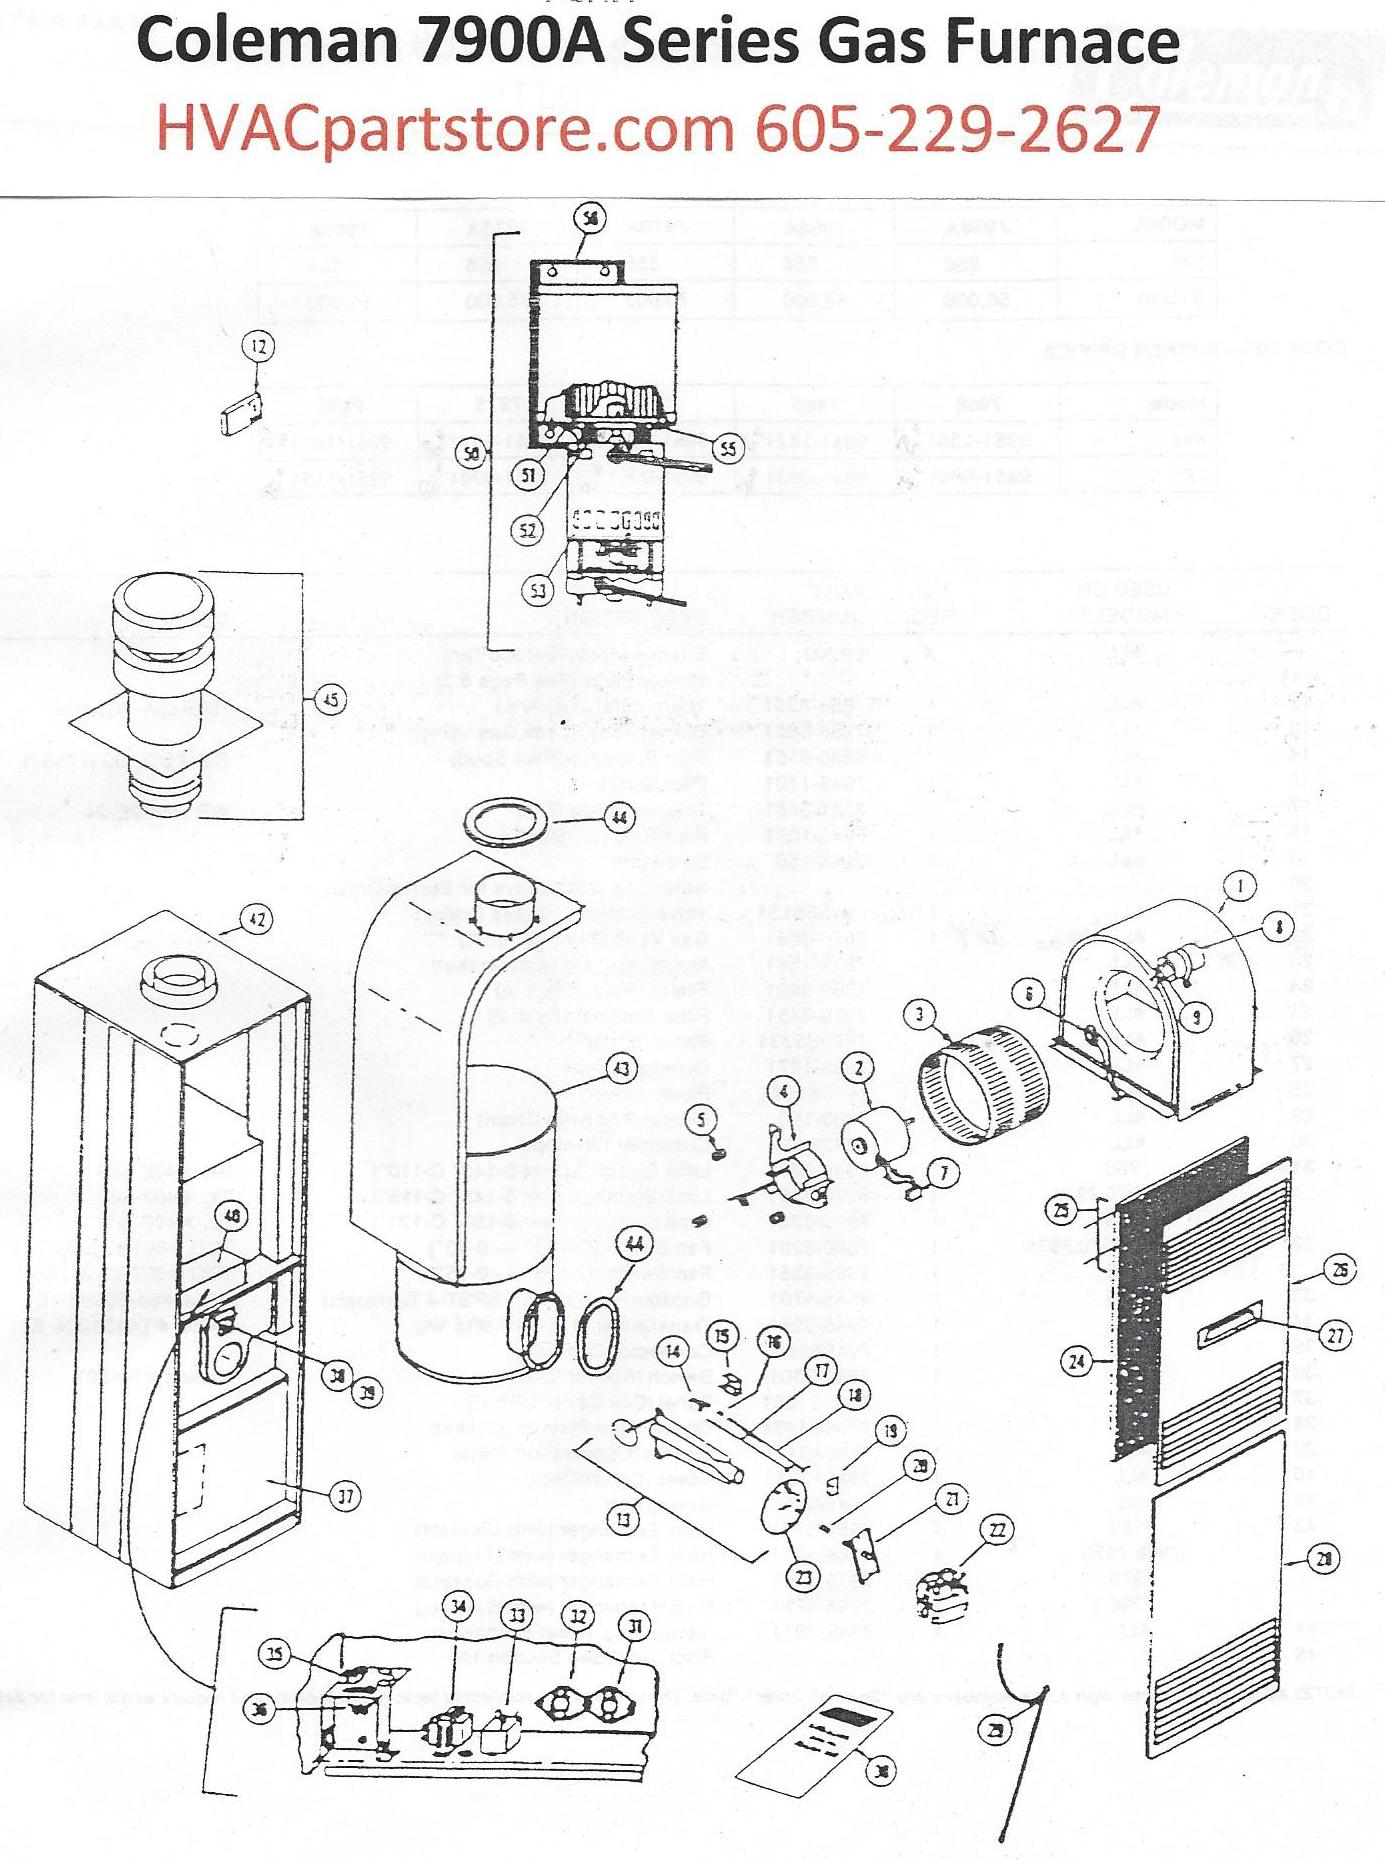 manual for coleman 3 burner stove